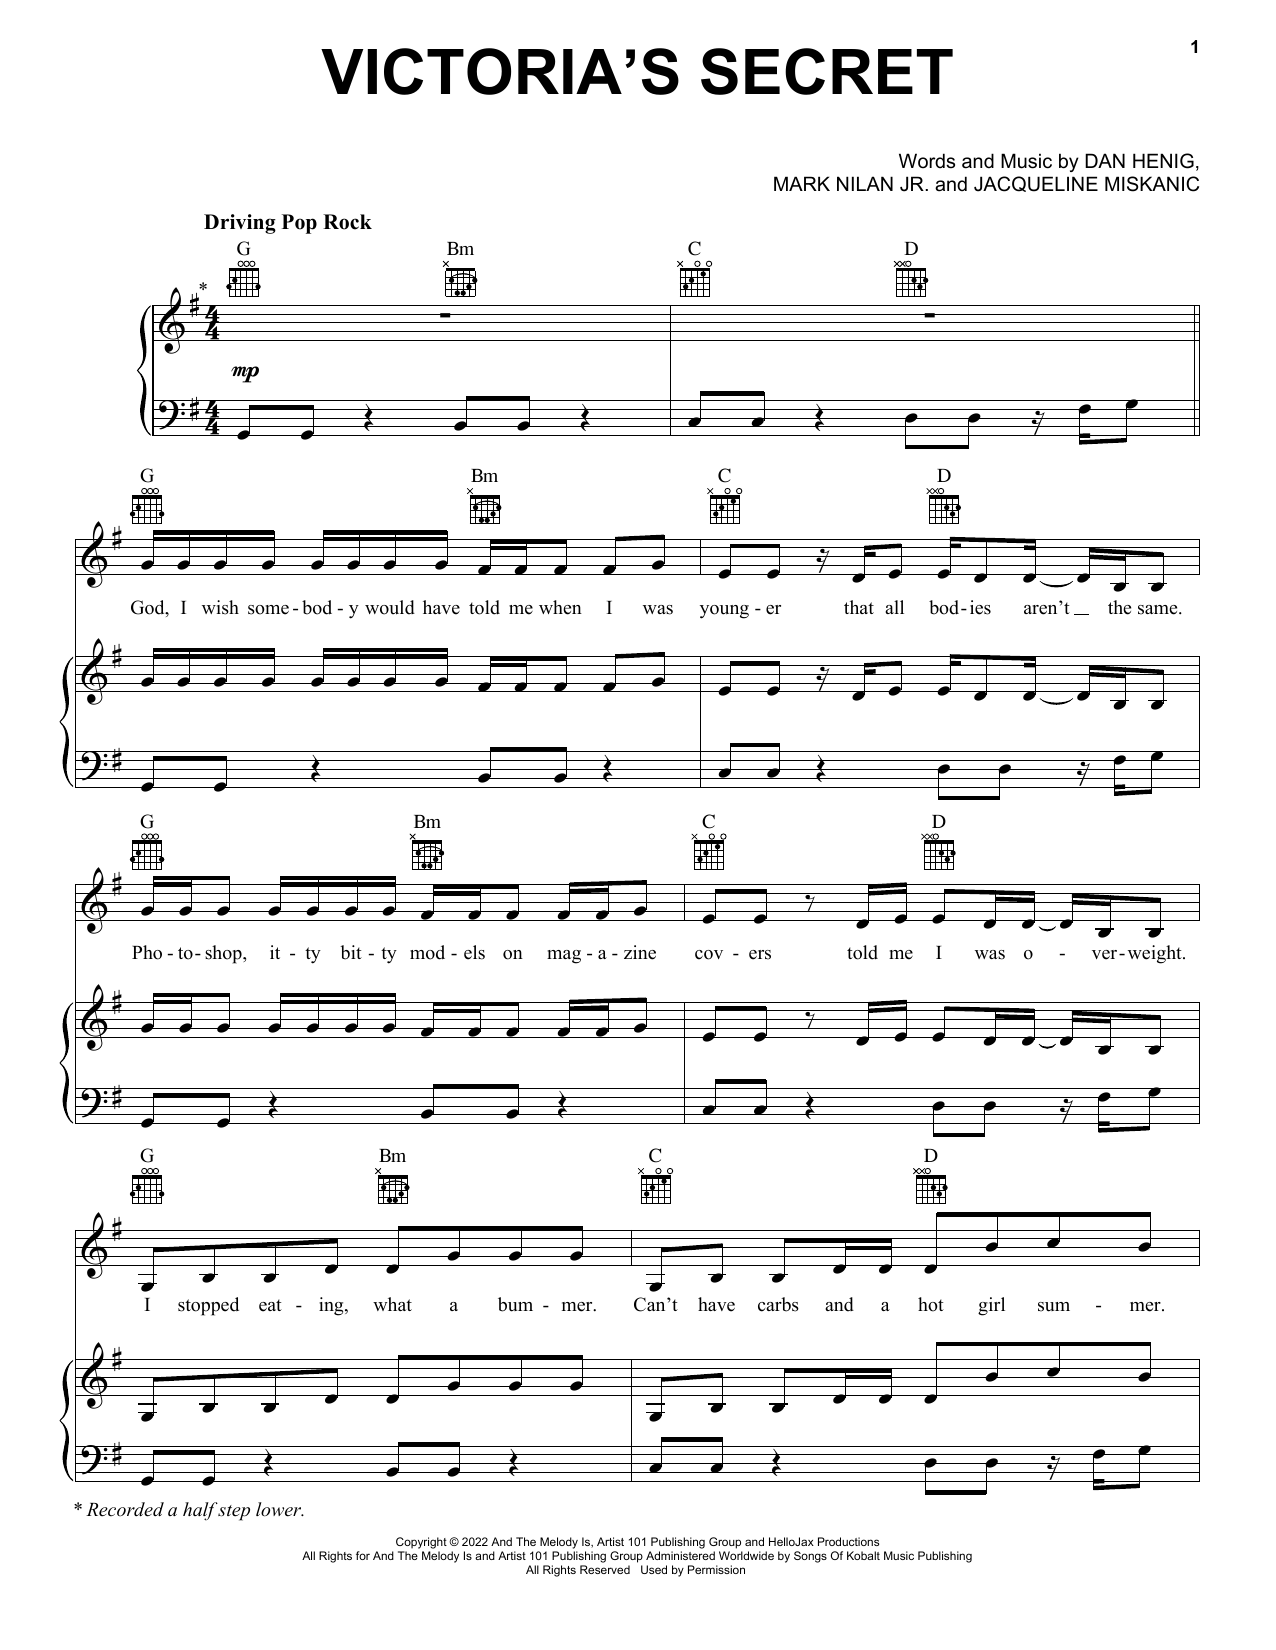 Jax Victoria's Secret sheet music notes and chords arranged for Ukulele